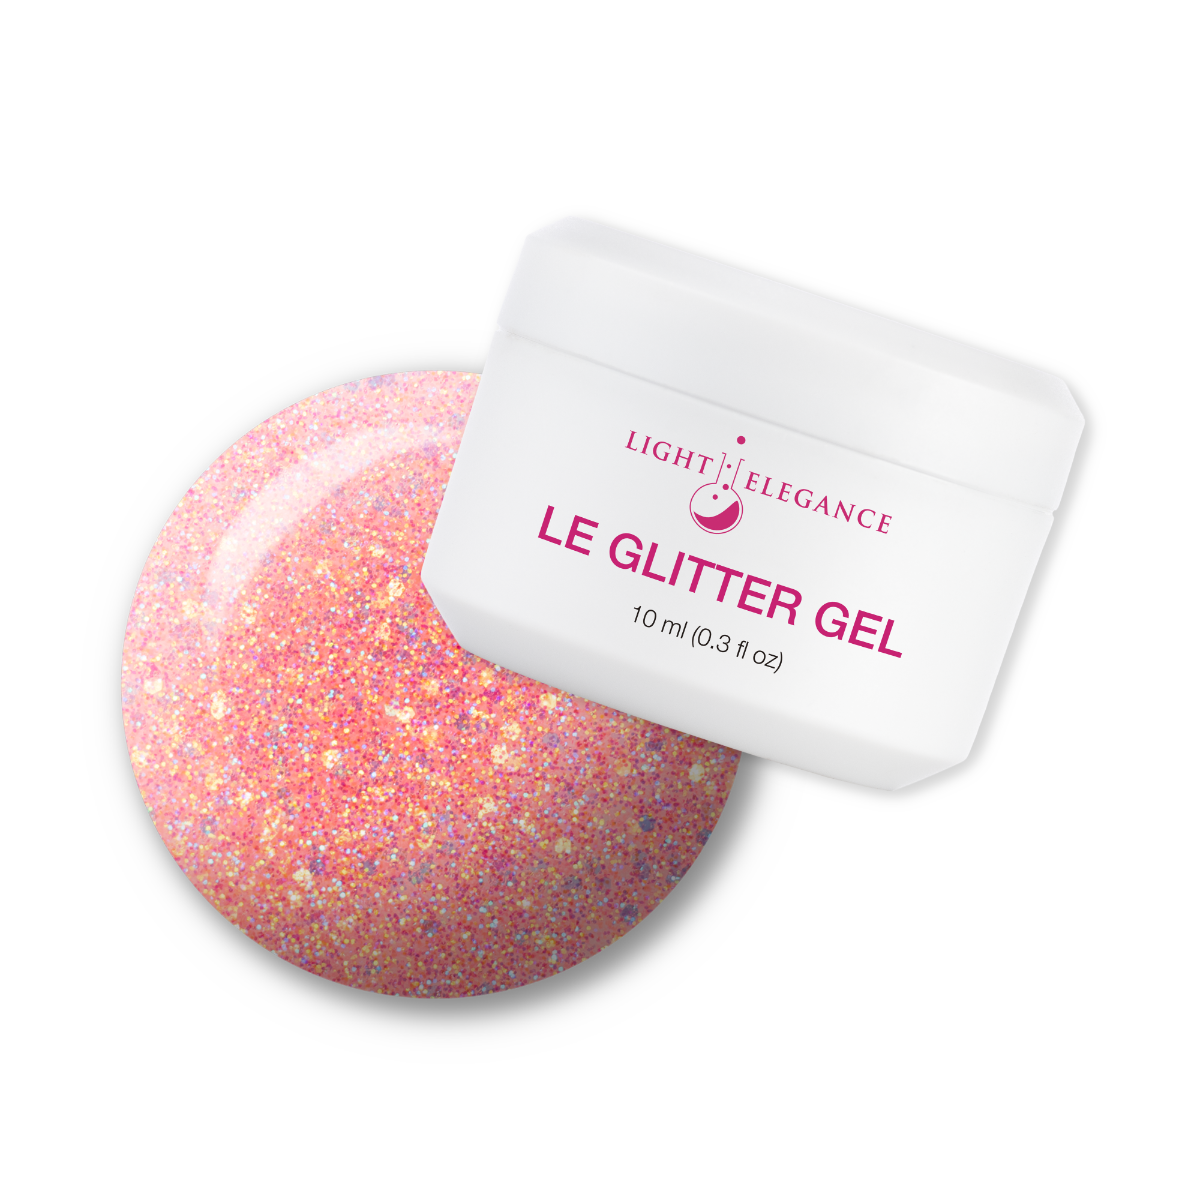 Light Elegance Glitter Gel - Mango Crush :: New Packaging - Creata Beauty - Professional Beauty Products